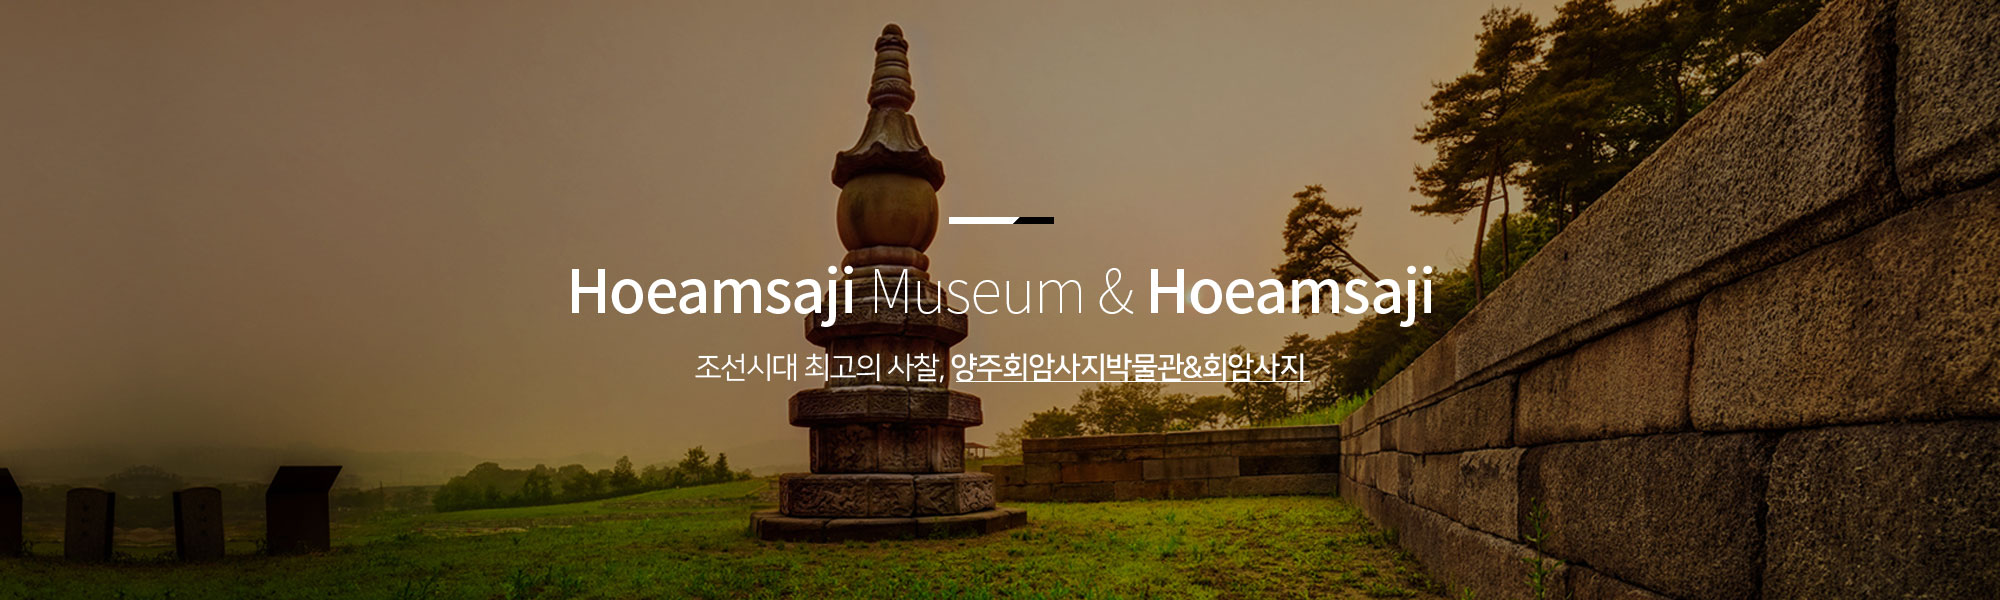 Hoeamsaji Museum & Hoeamsaji 조선시대 최고의 사찰, 양주회암사지박물관&회암사지